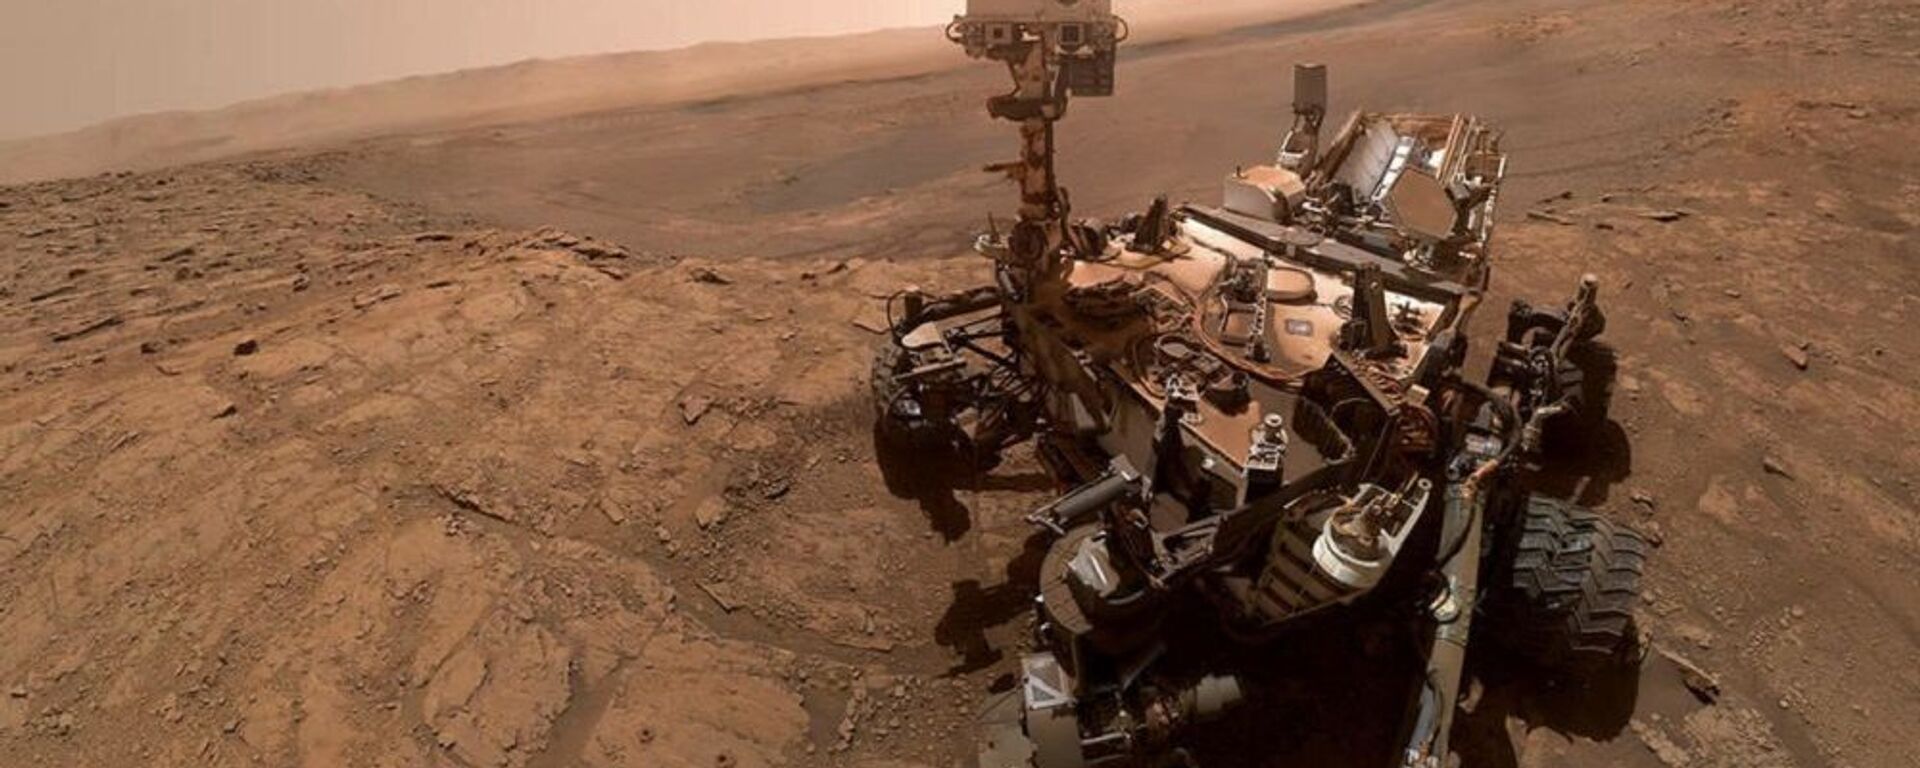 Селфи марсохода Curiosity на хребте имени Веры Рубин на Марсе. 11 октября 2019 год - Sputnik Грузия, 1920, 23.04.2021